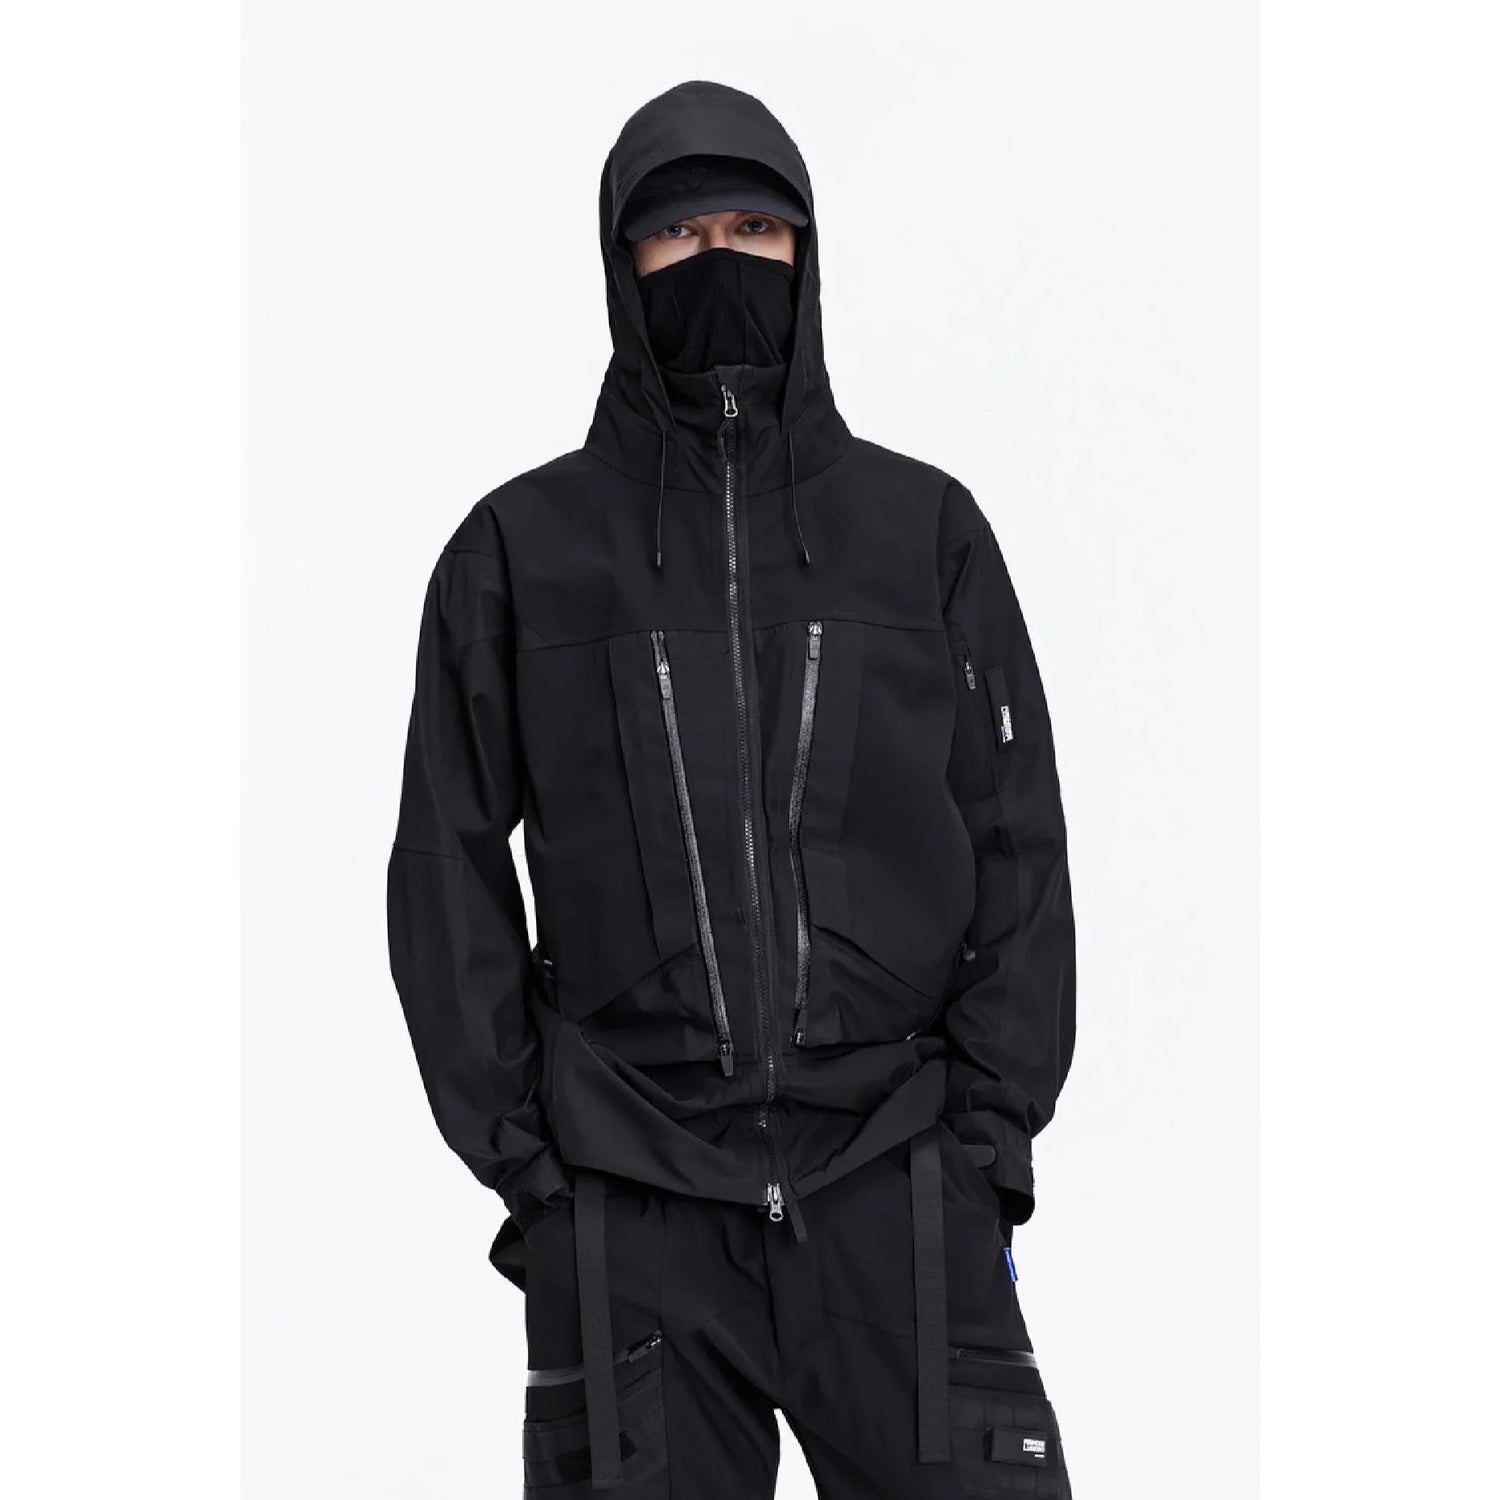 A man wearing The 0107 Ski Down Techwear Jacket in Black Color